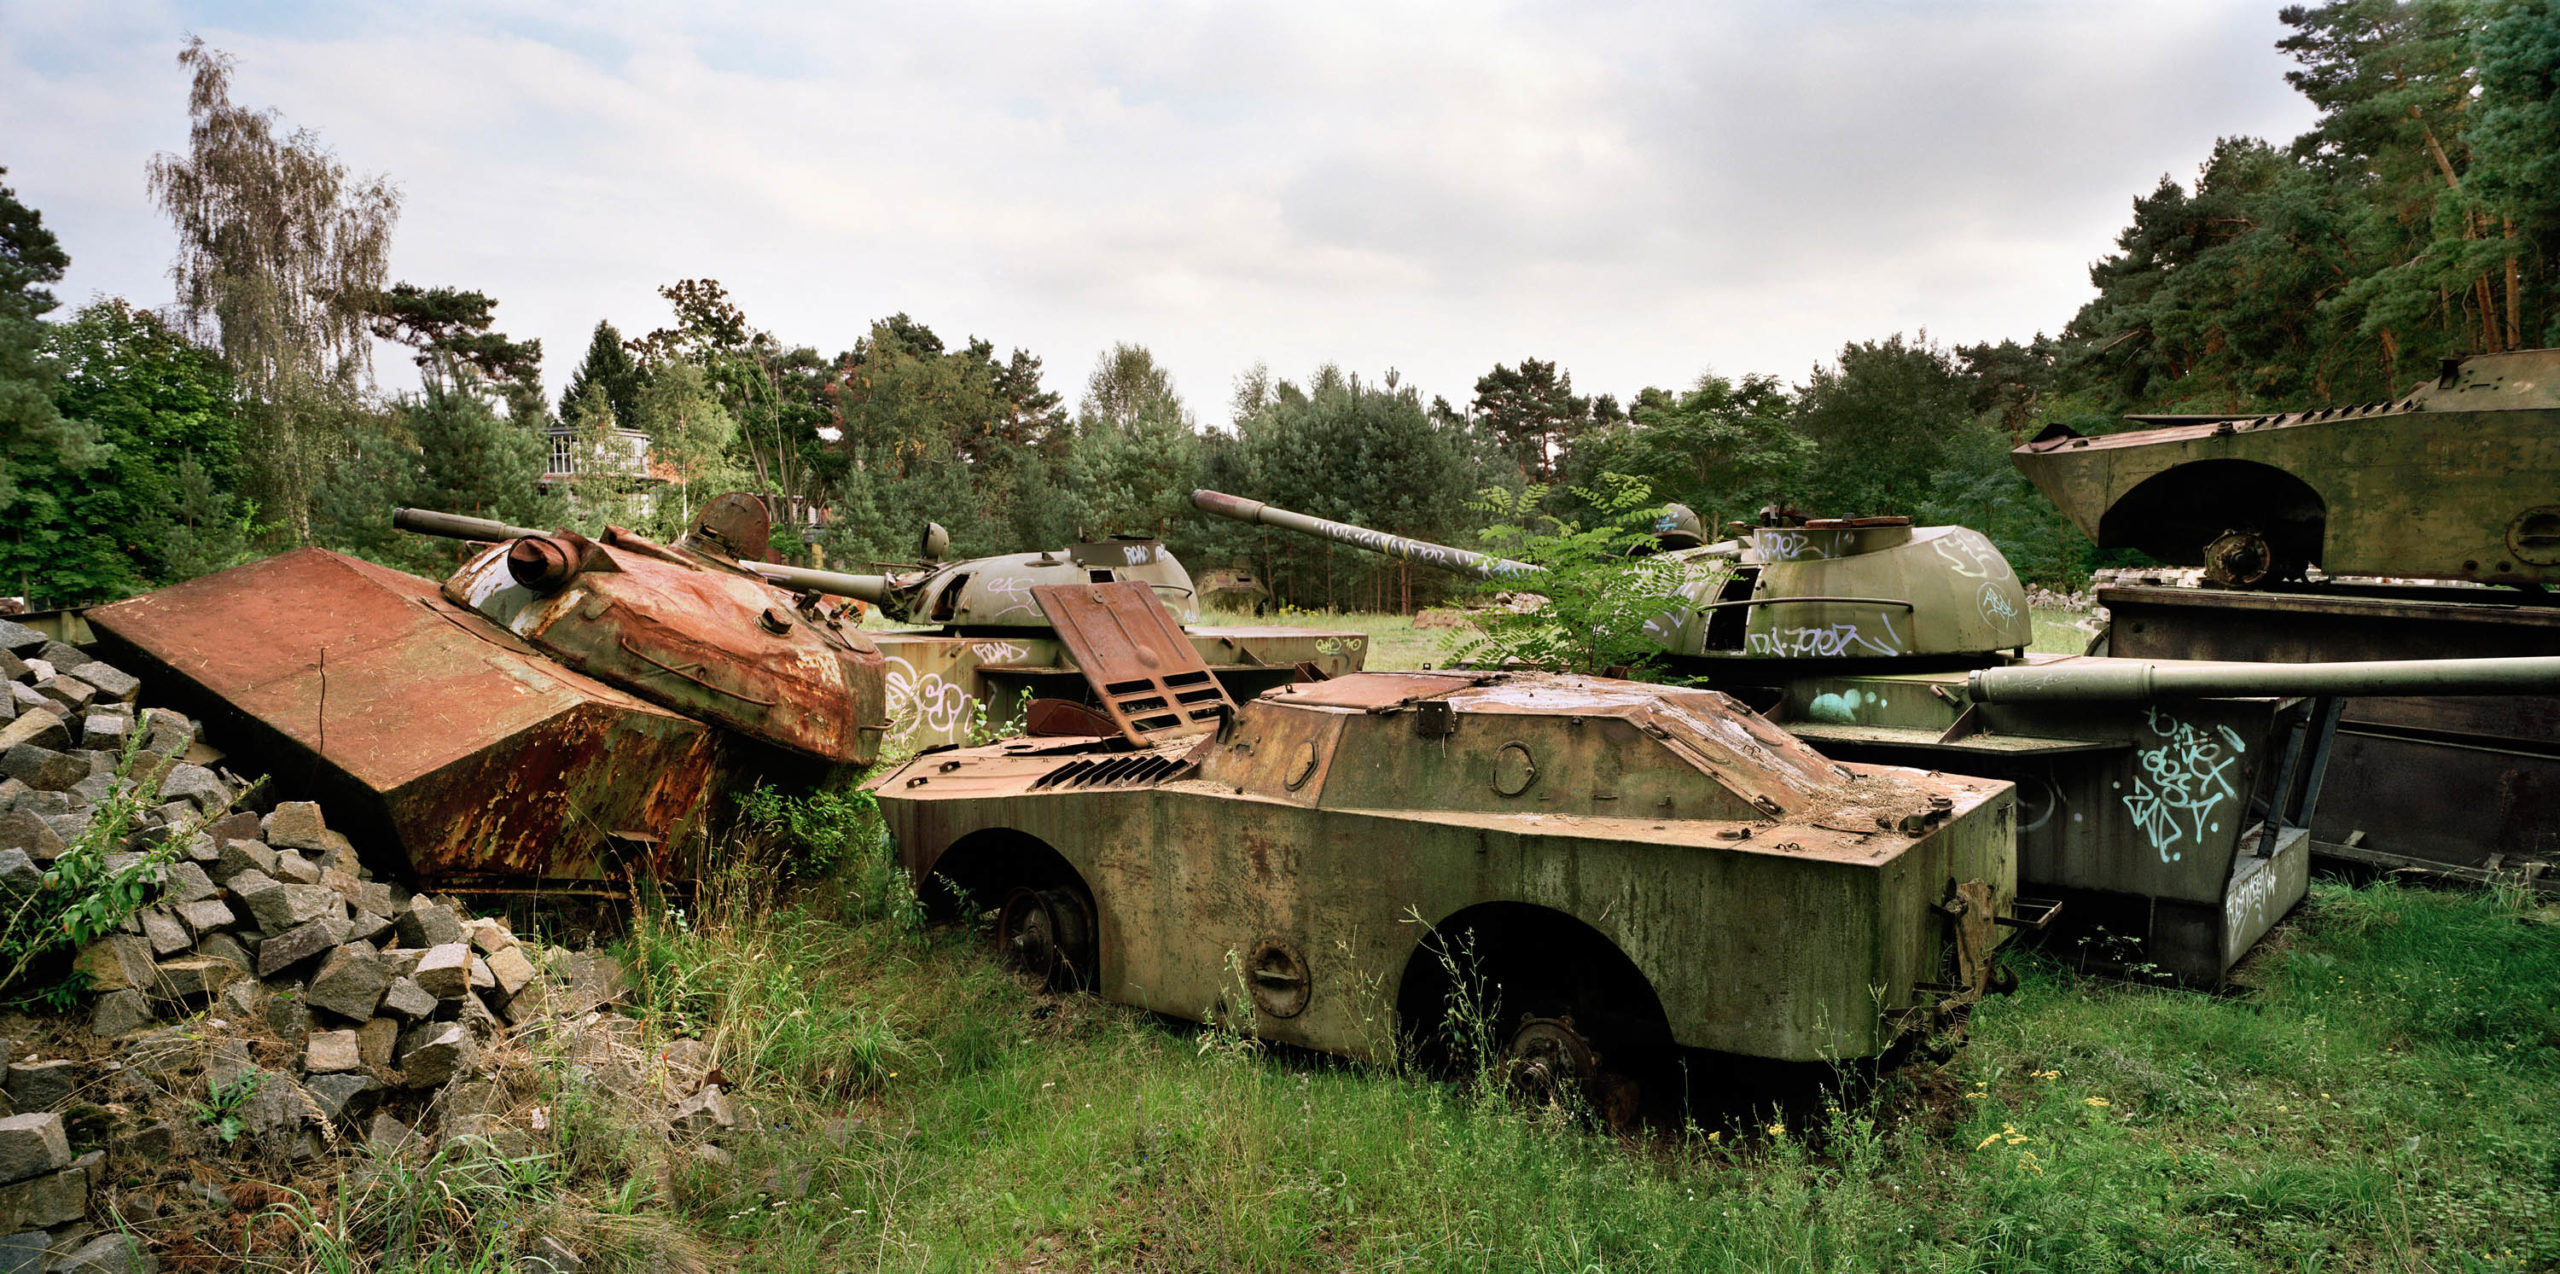 East Germany. Tanks to be sold as scrap metal